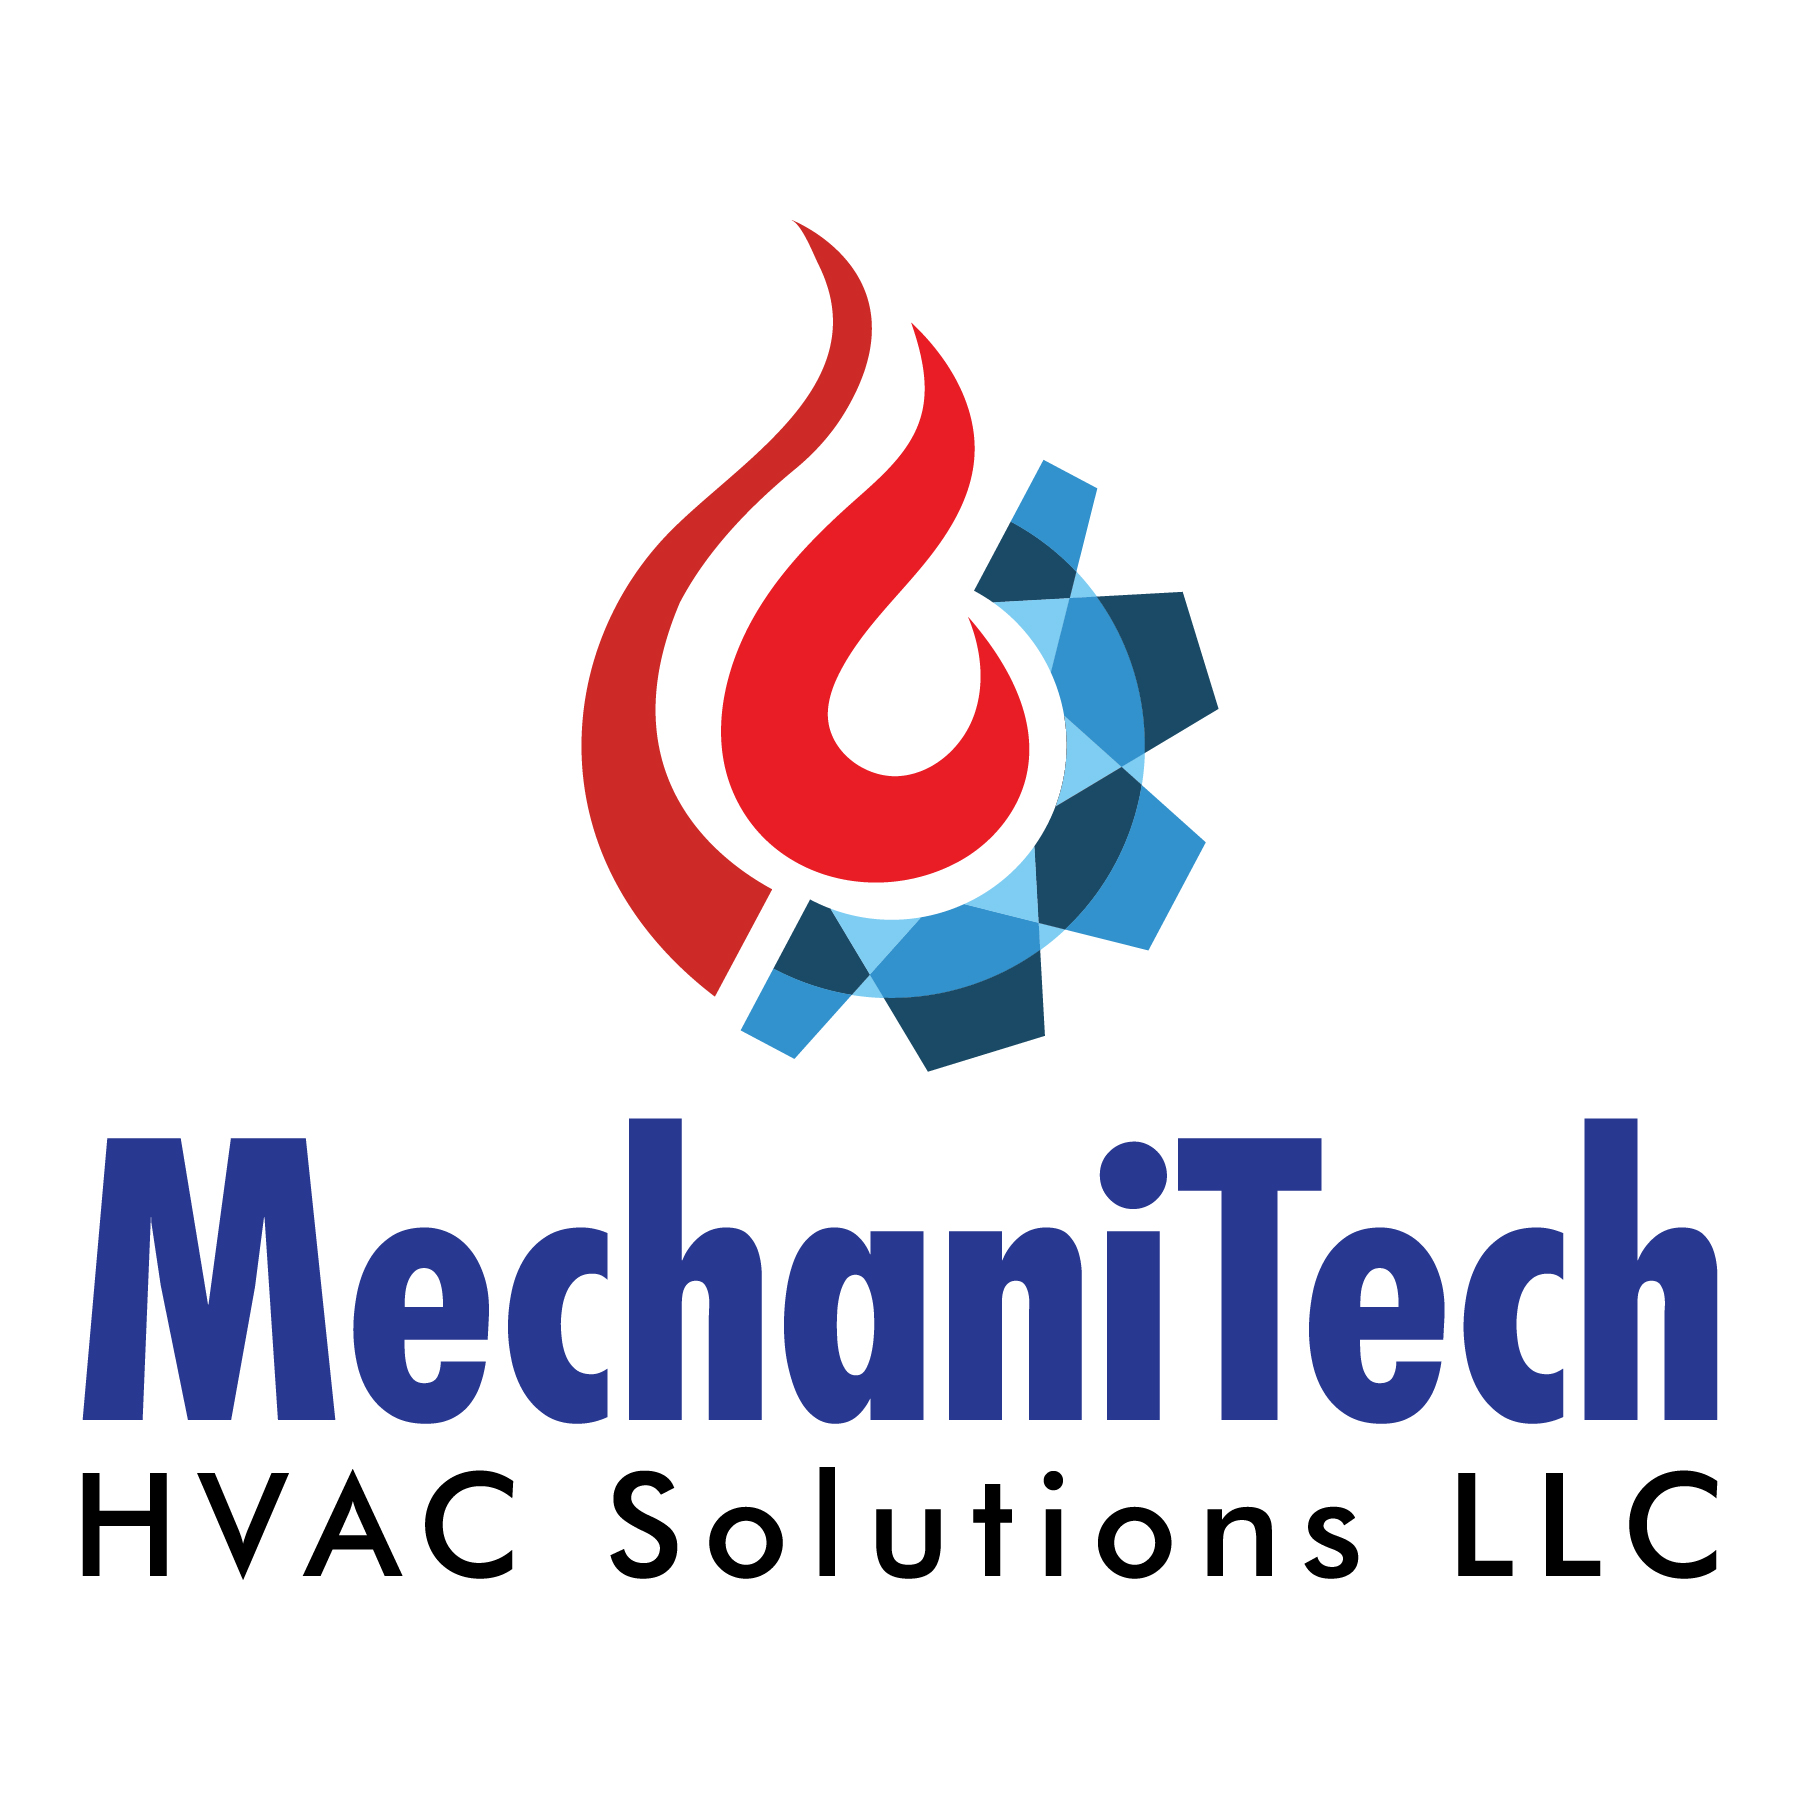 MechaniTech HVAC Solutions LLC